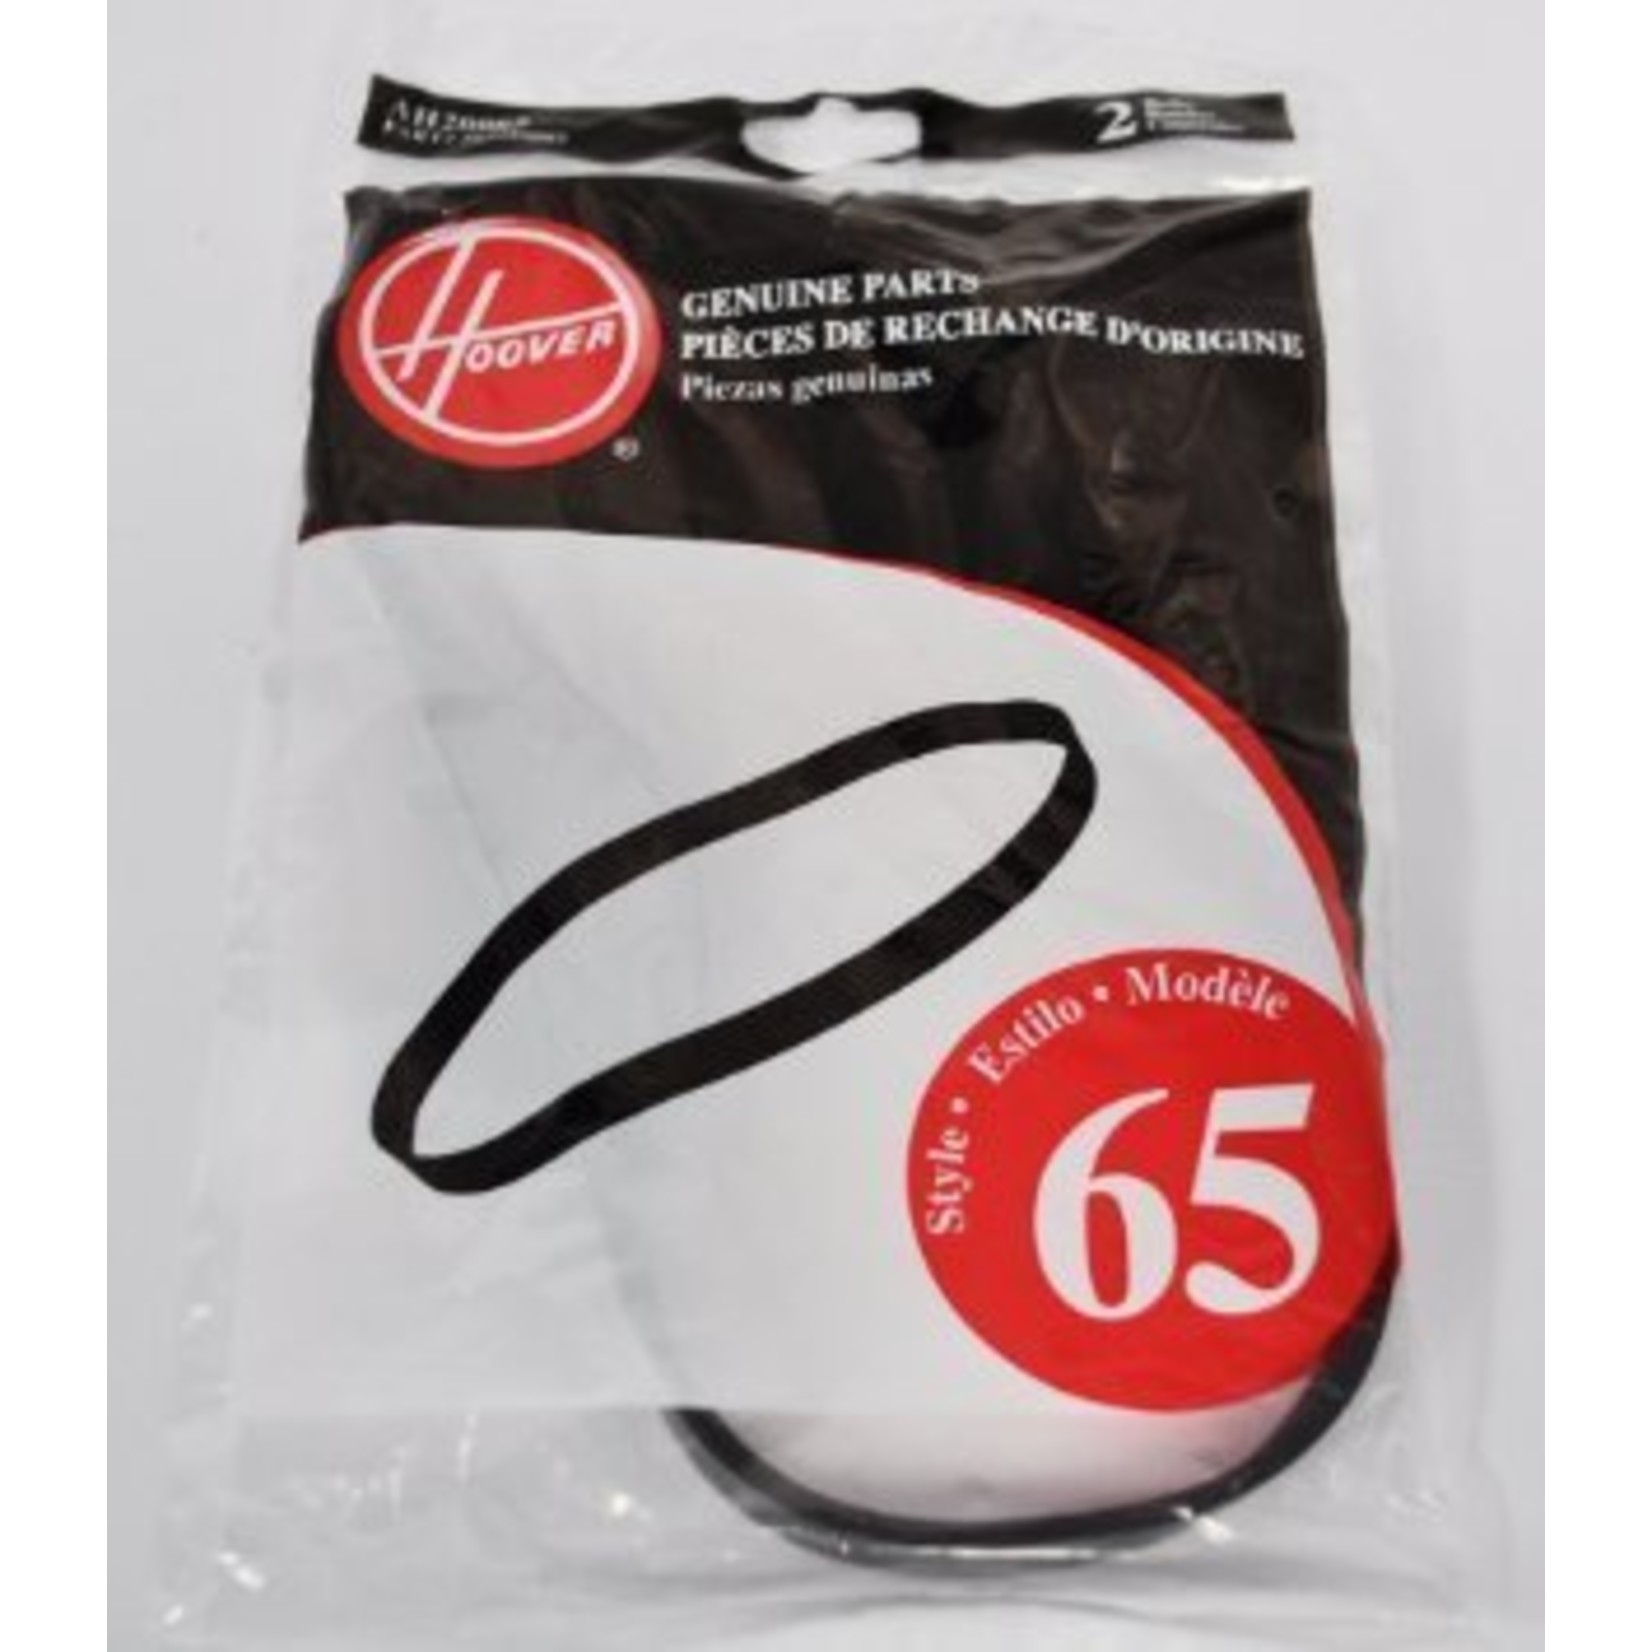 Hoover Hoover Windtunnel T Series Style "65" Belt (2pk)